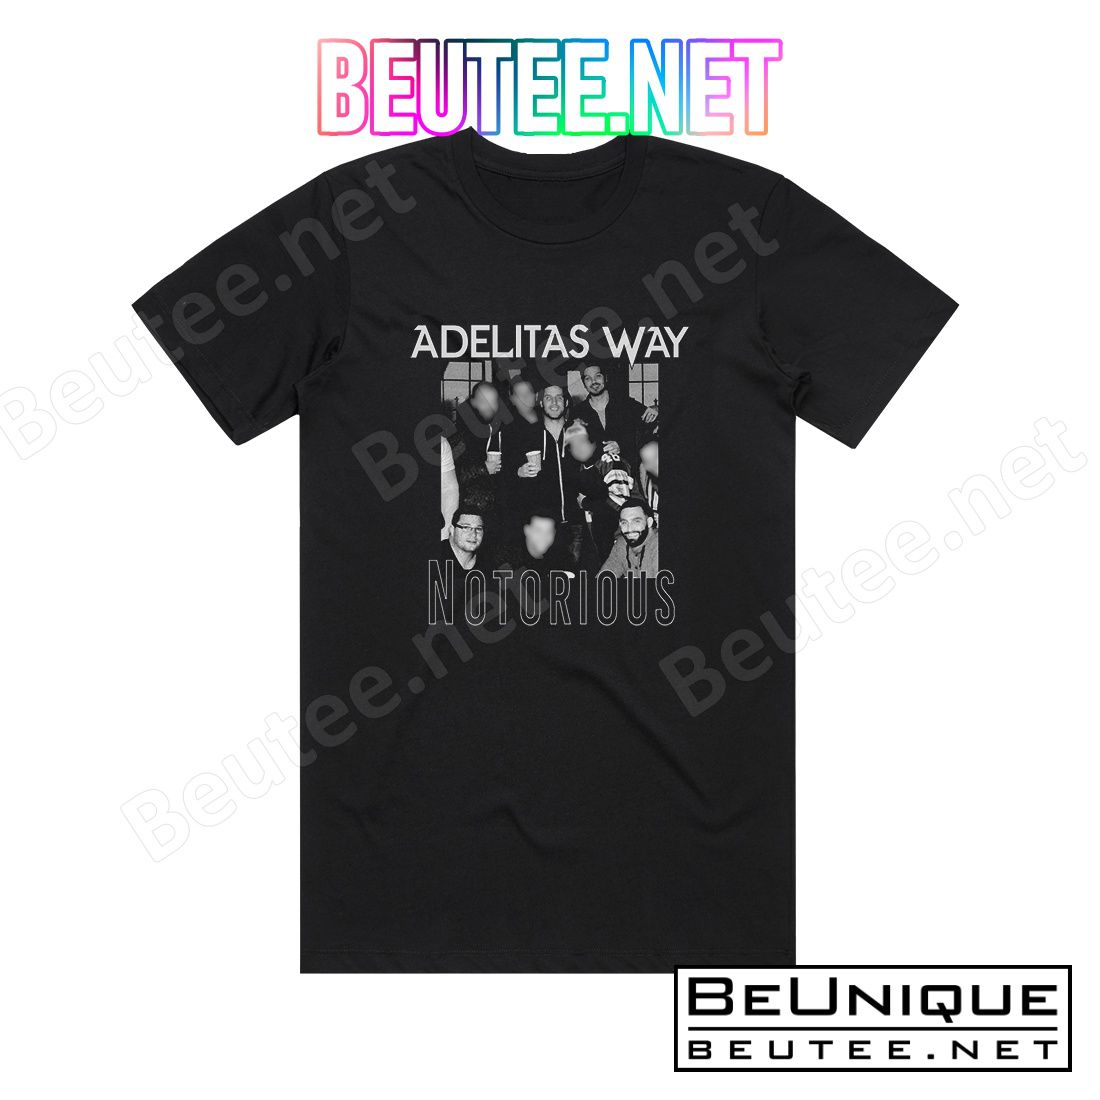 Adelitas Way Notorious 1 Album Cover T-shirt